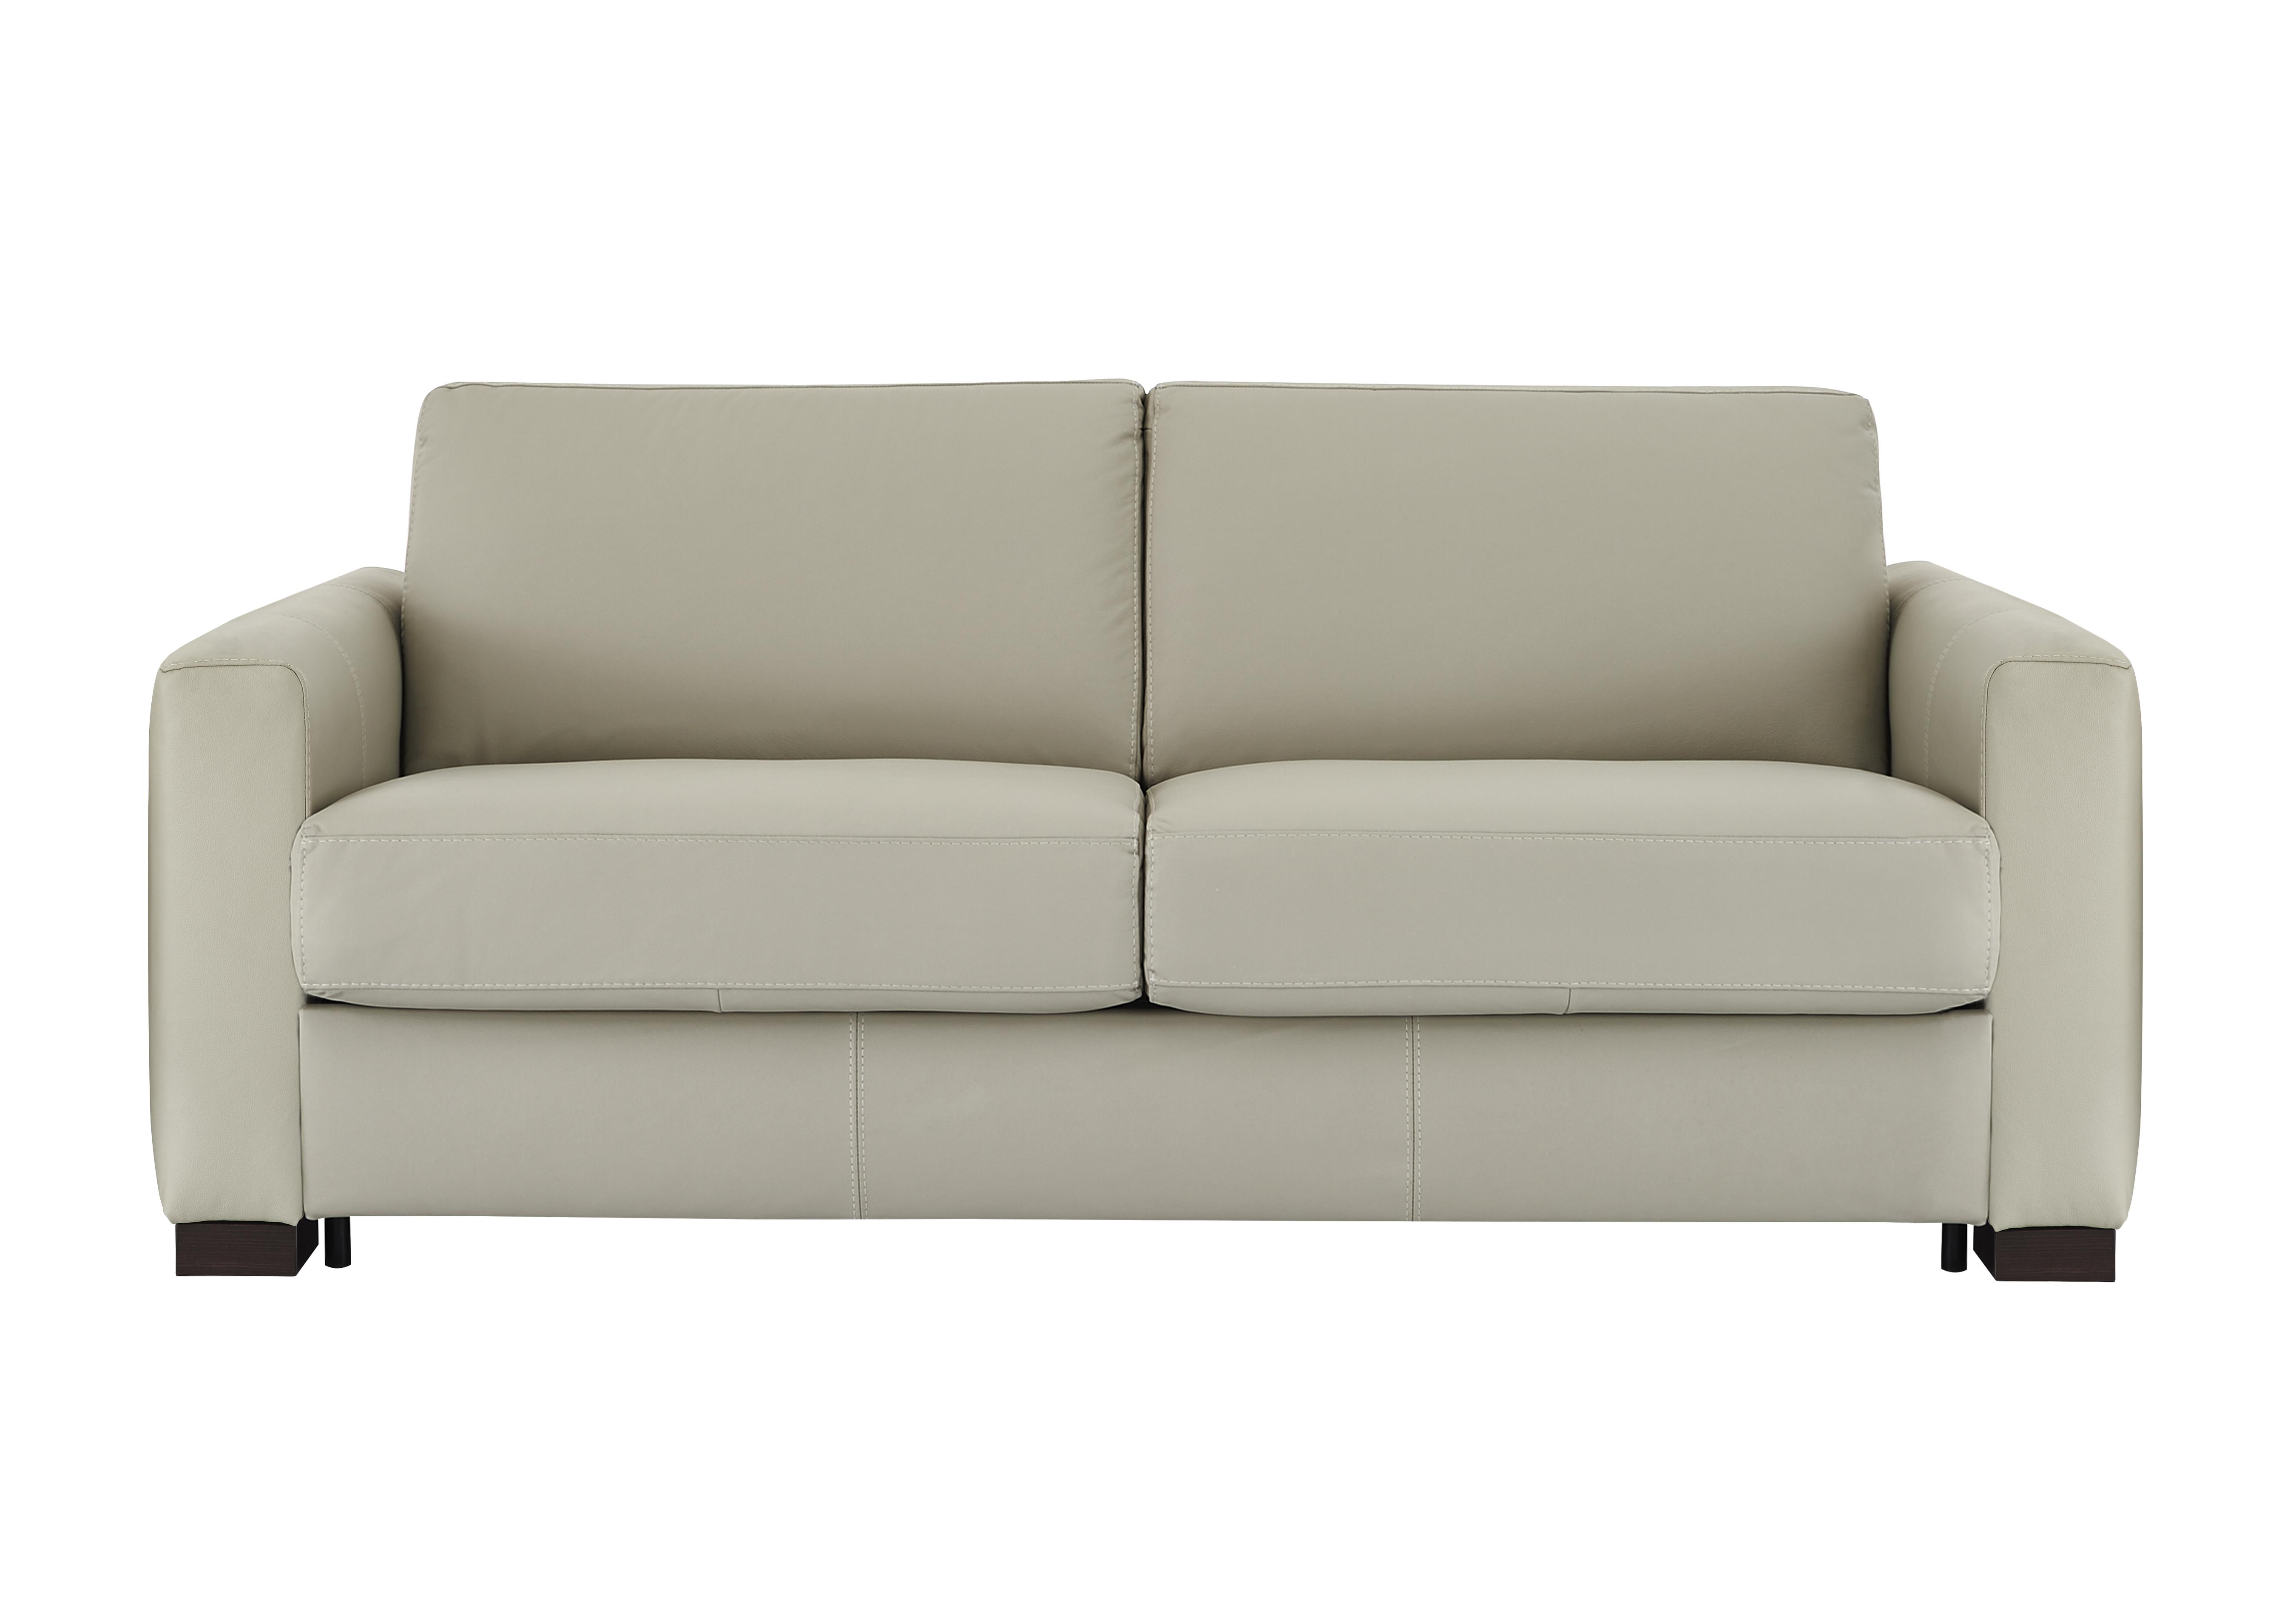 Alcova 3 Seater Leather Sofa Bed with Box Arms in Torello Tortora 328 on Furniture Village